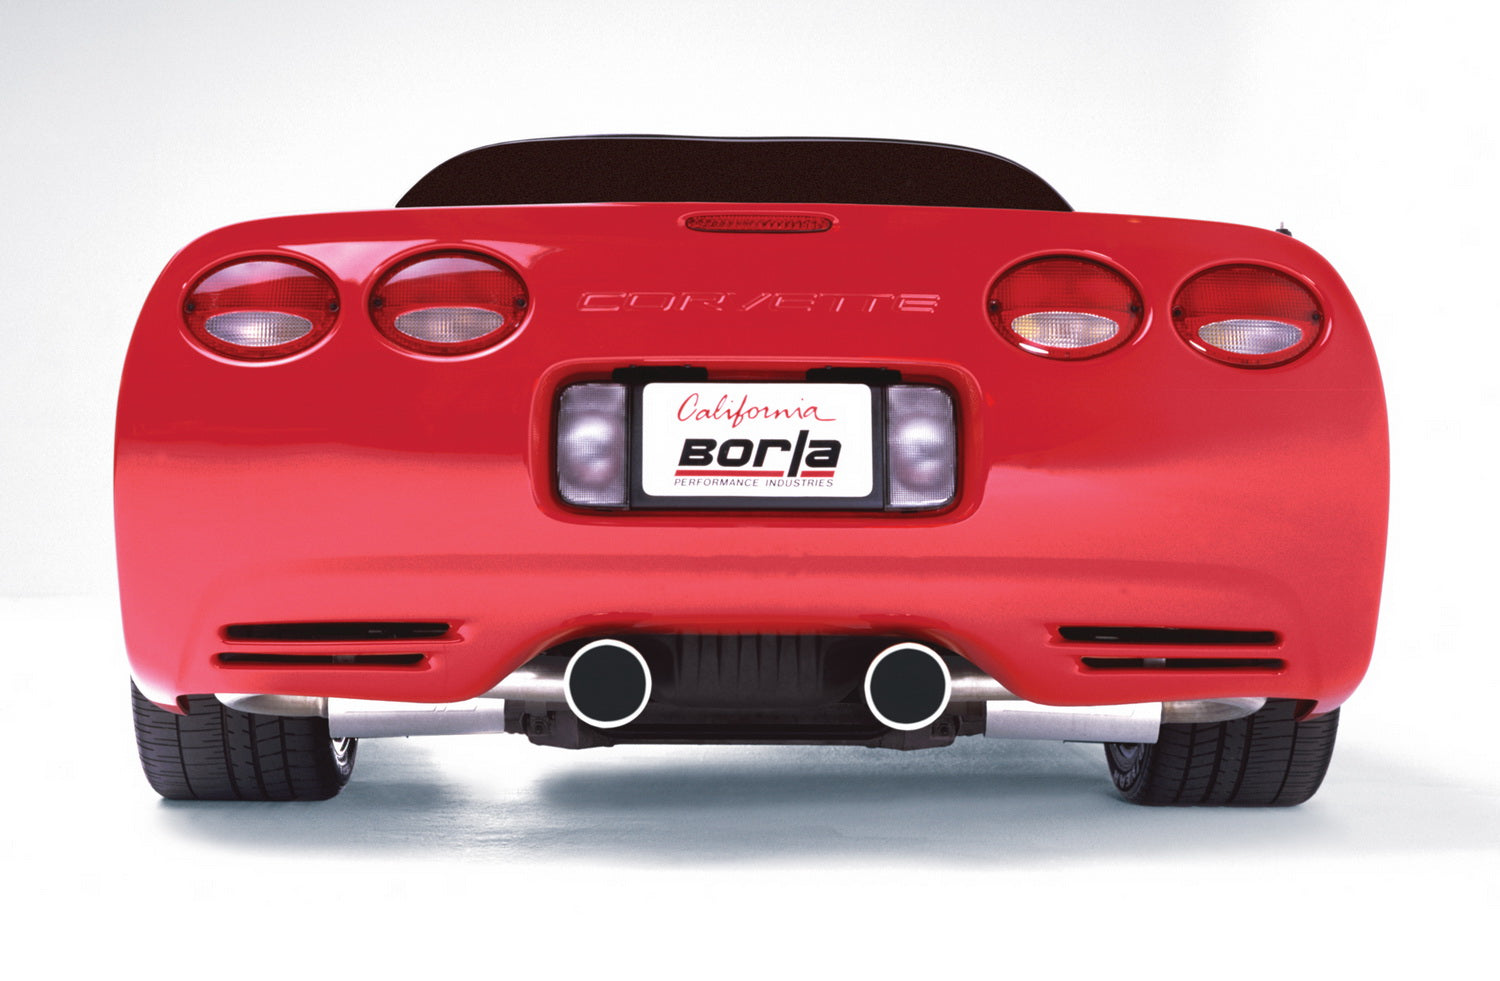 Borla 140017 S-Type Cat-Back Exhaust System Fits 97-04 Corvette